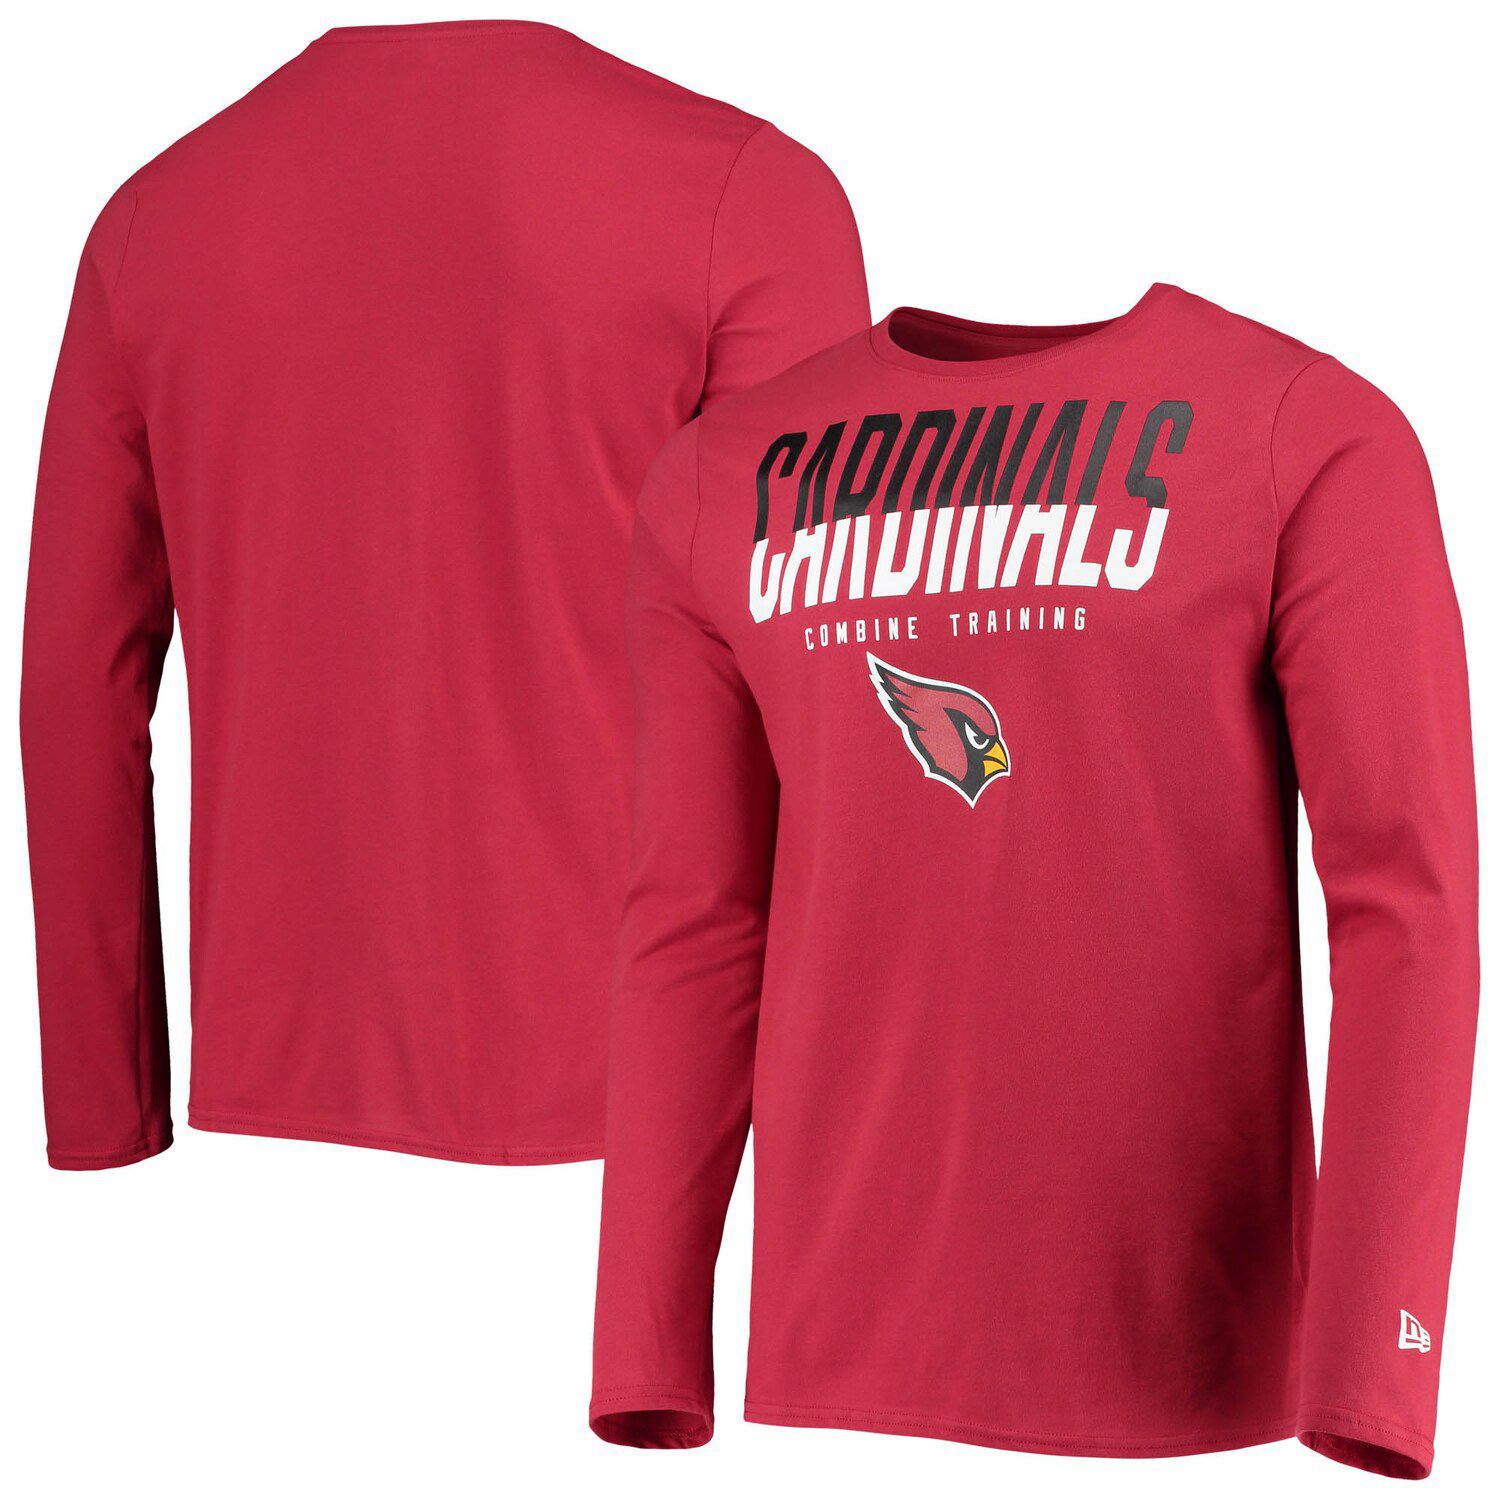 Lids Arizona Cardinals Refried Apparel Sustainable Upcycled Split T-Shirt -  Black/Cardinal